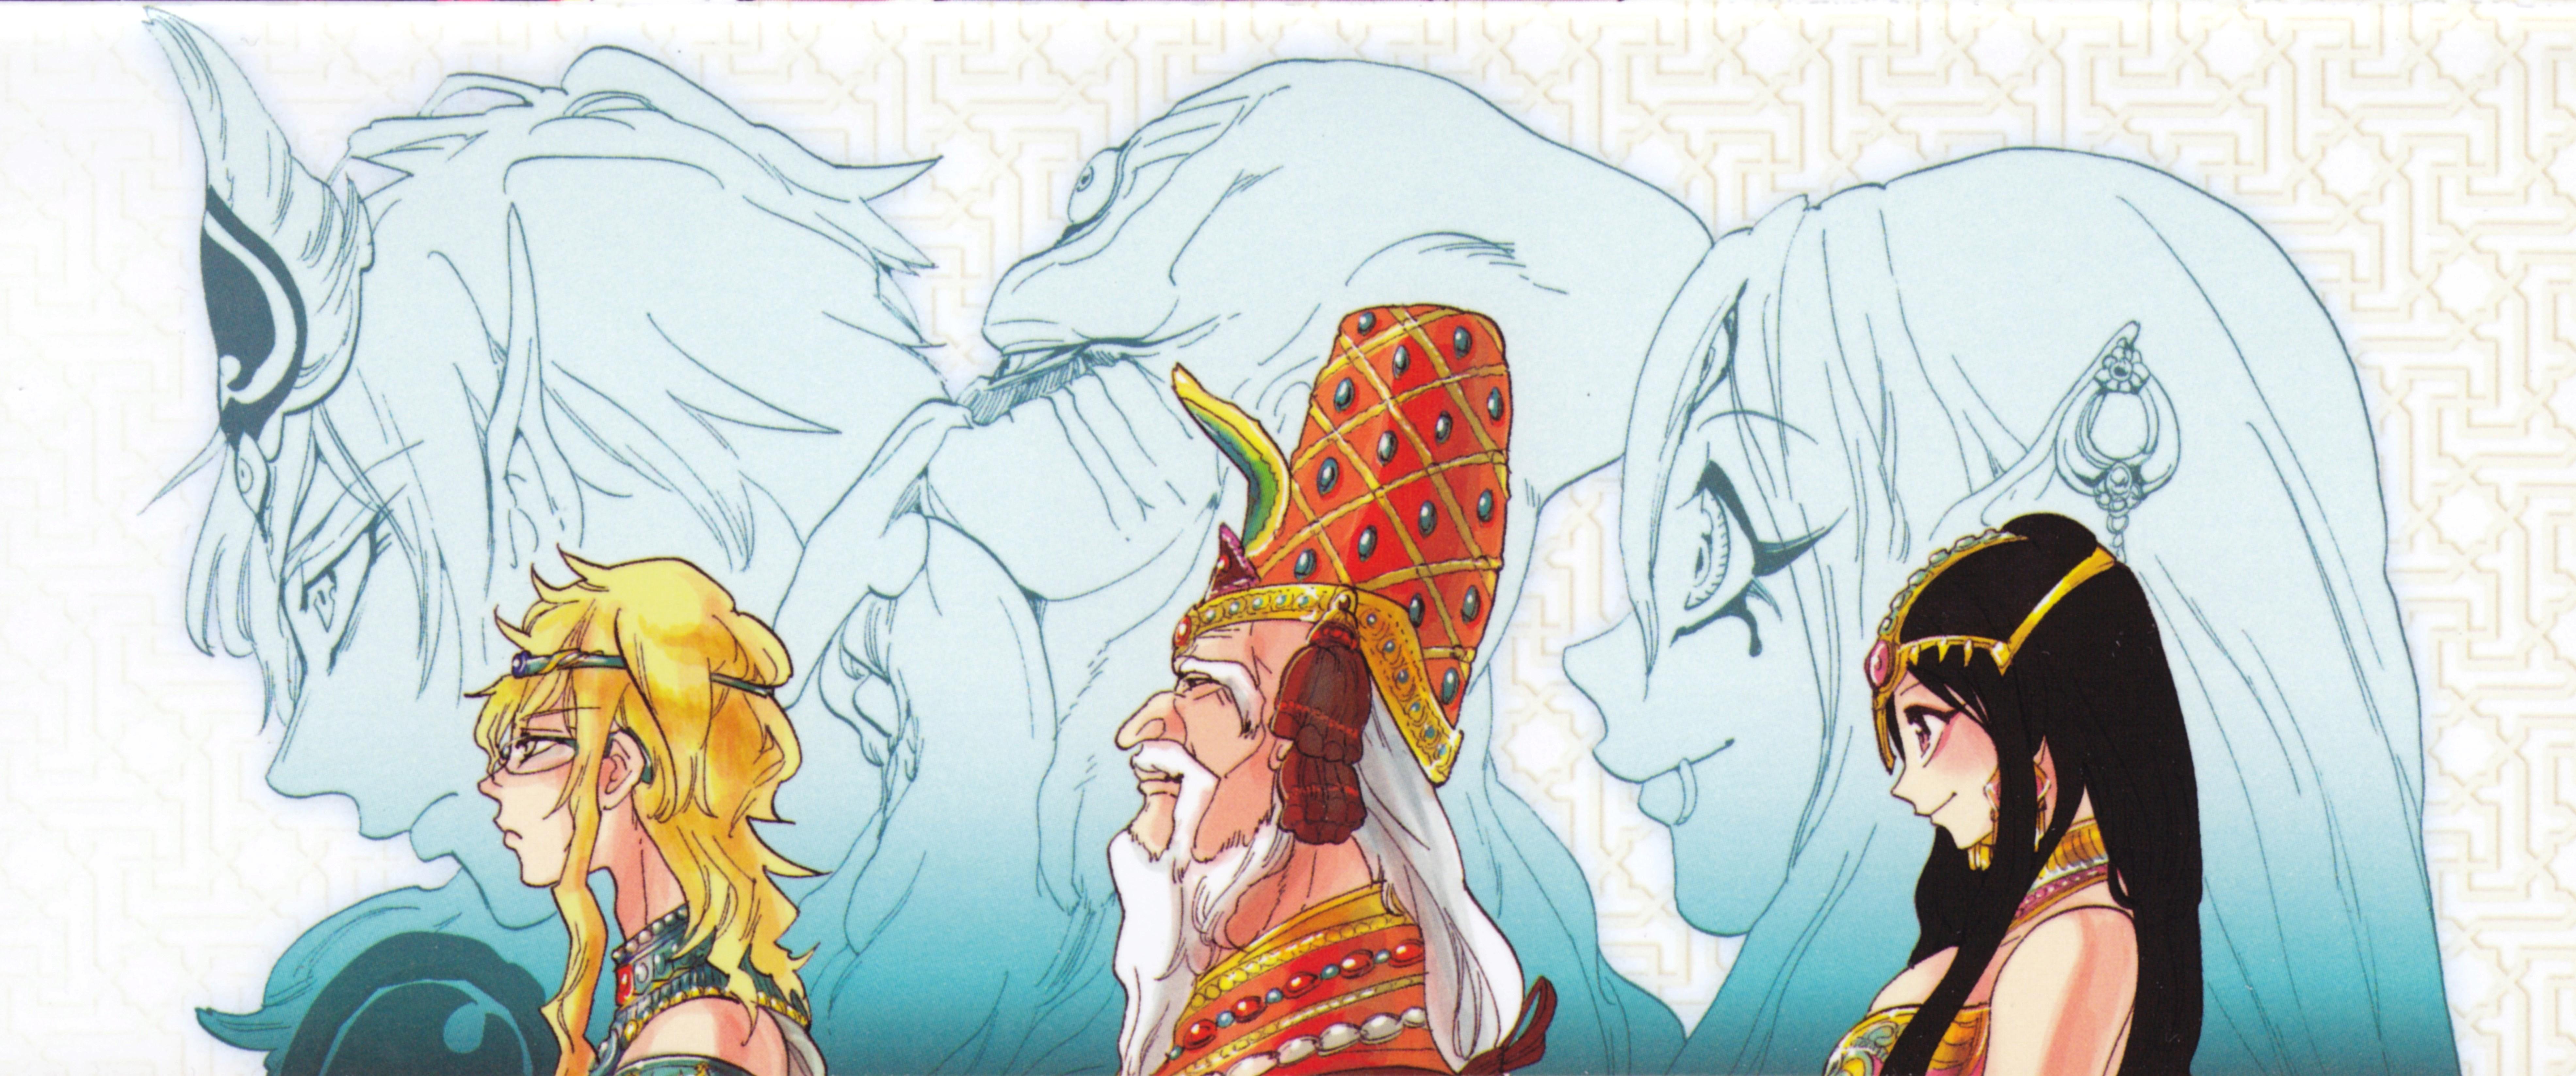 Paimon: The Labyrinth of Magic Anime Image